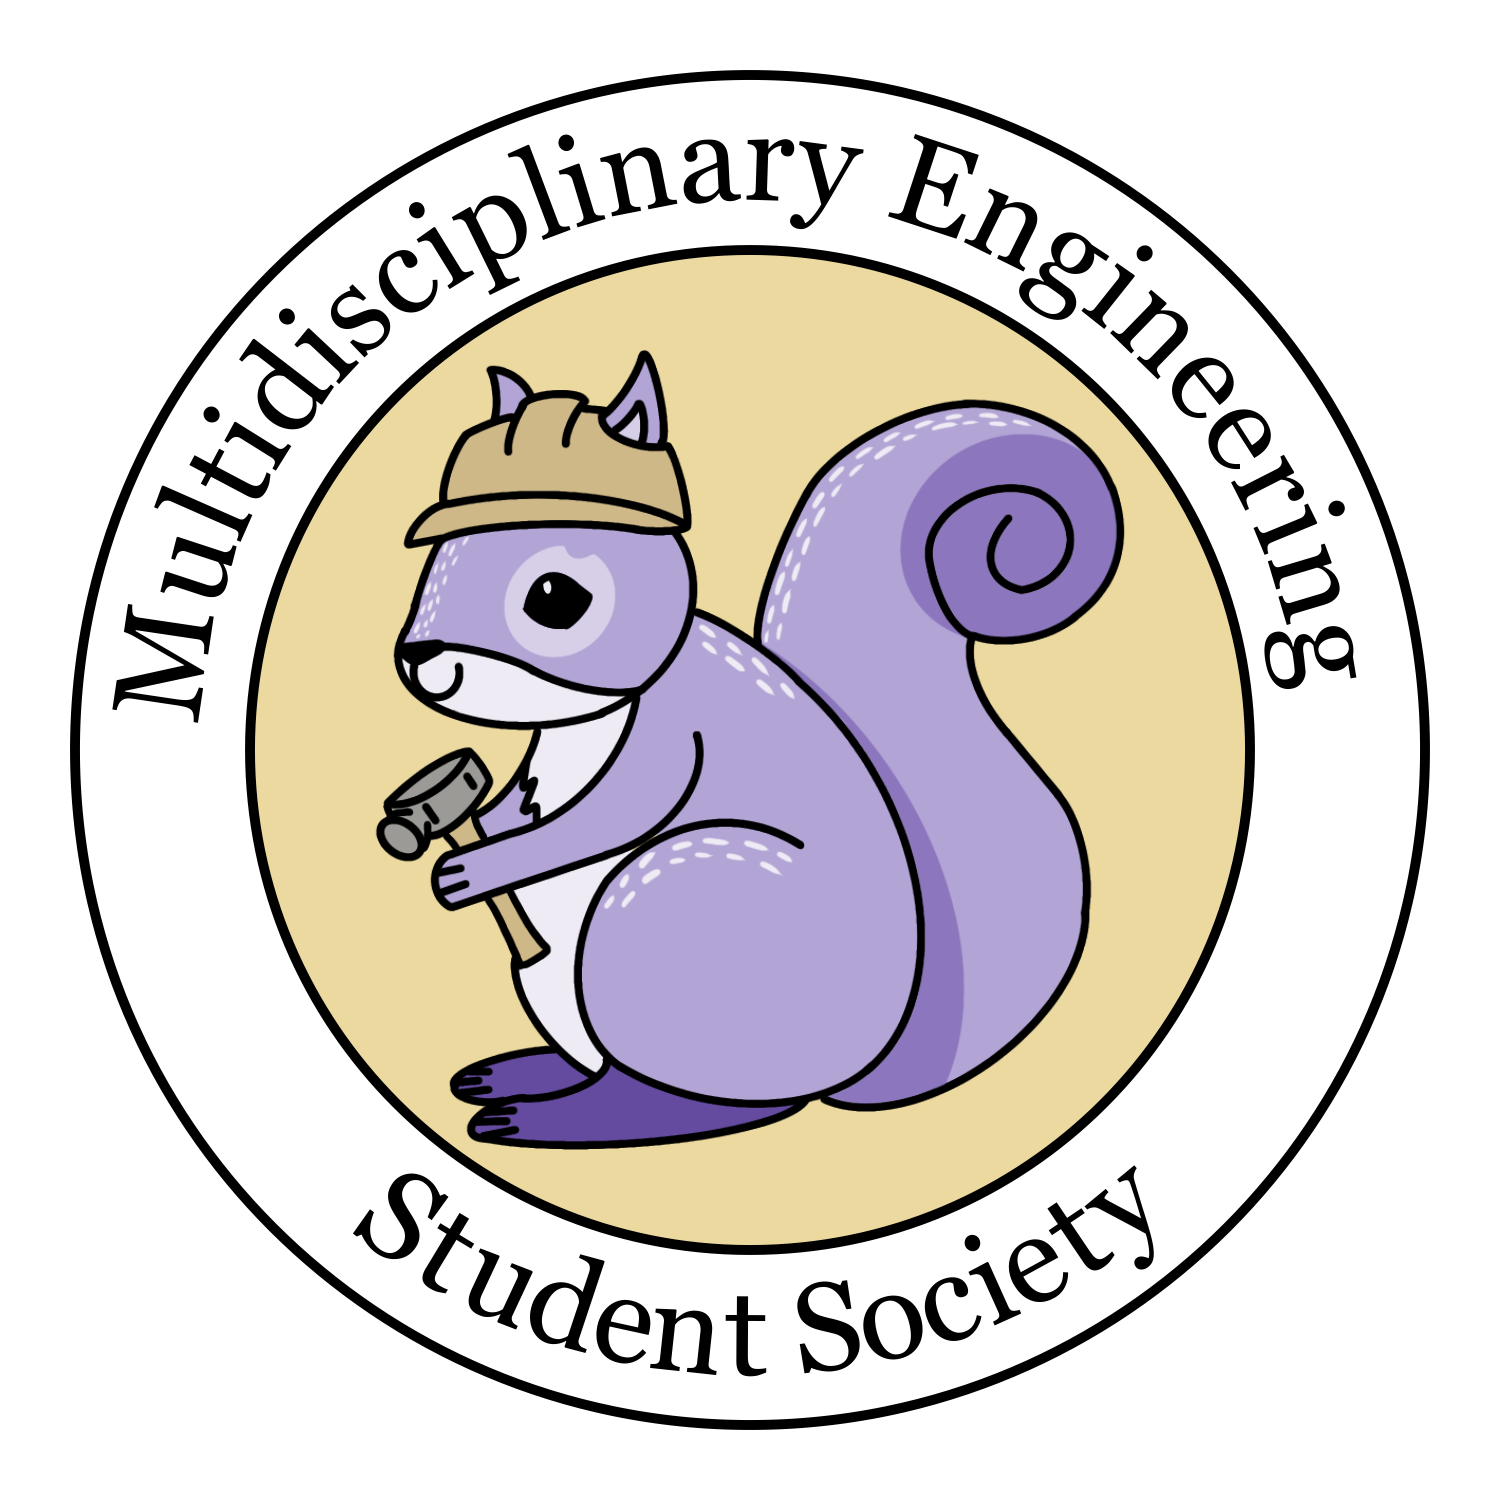 Multidisciplinary Engineering Student Society